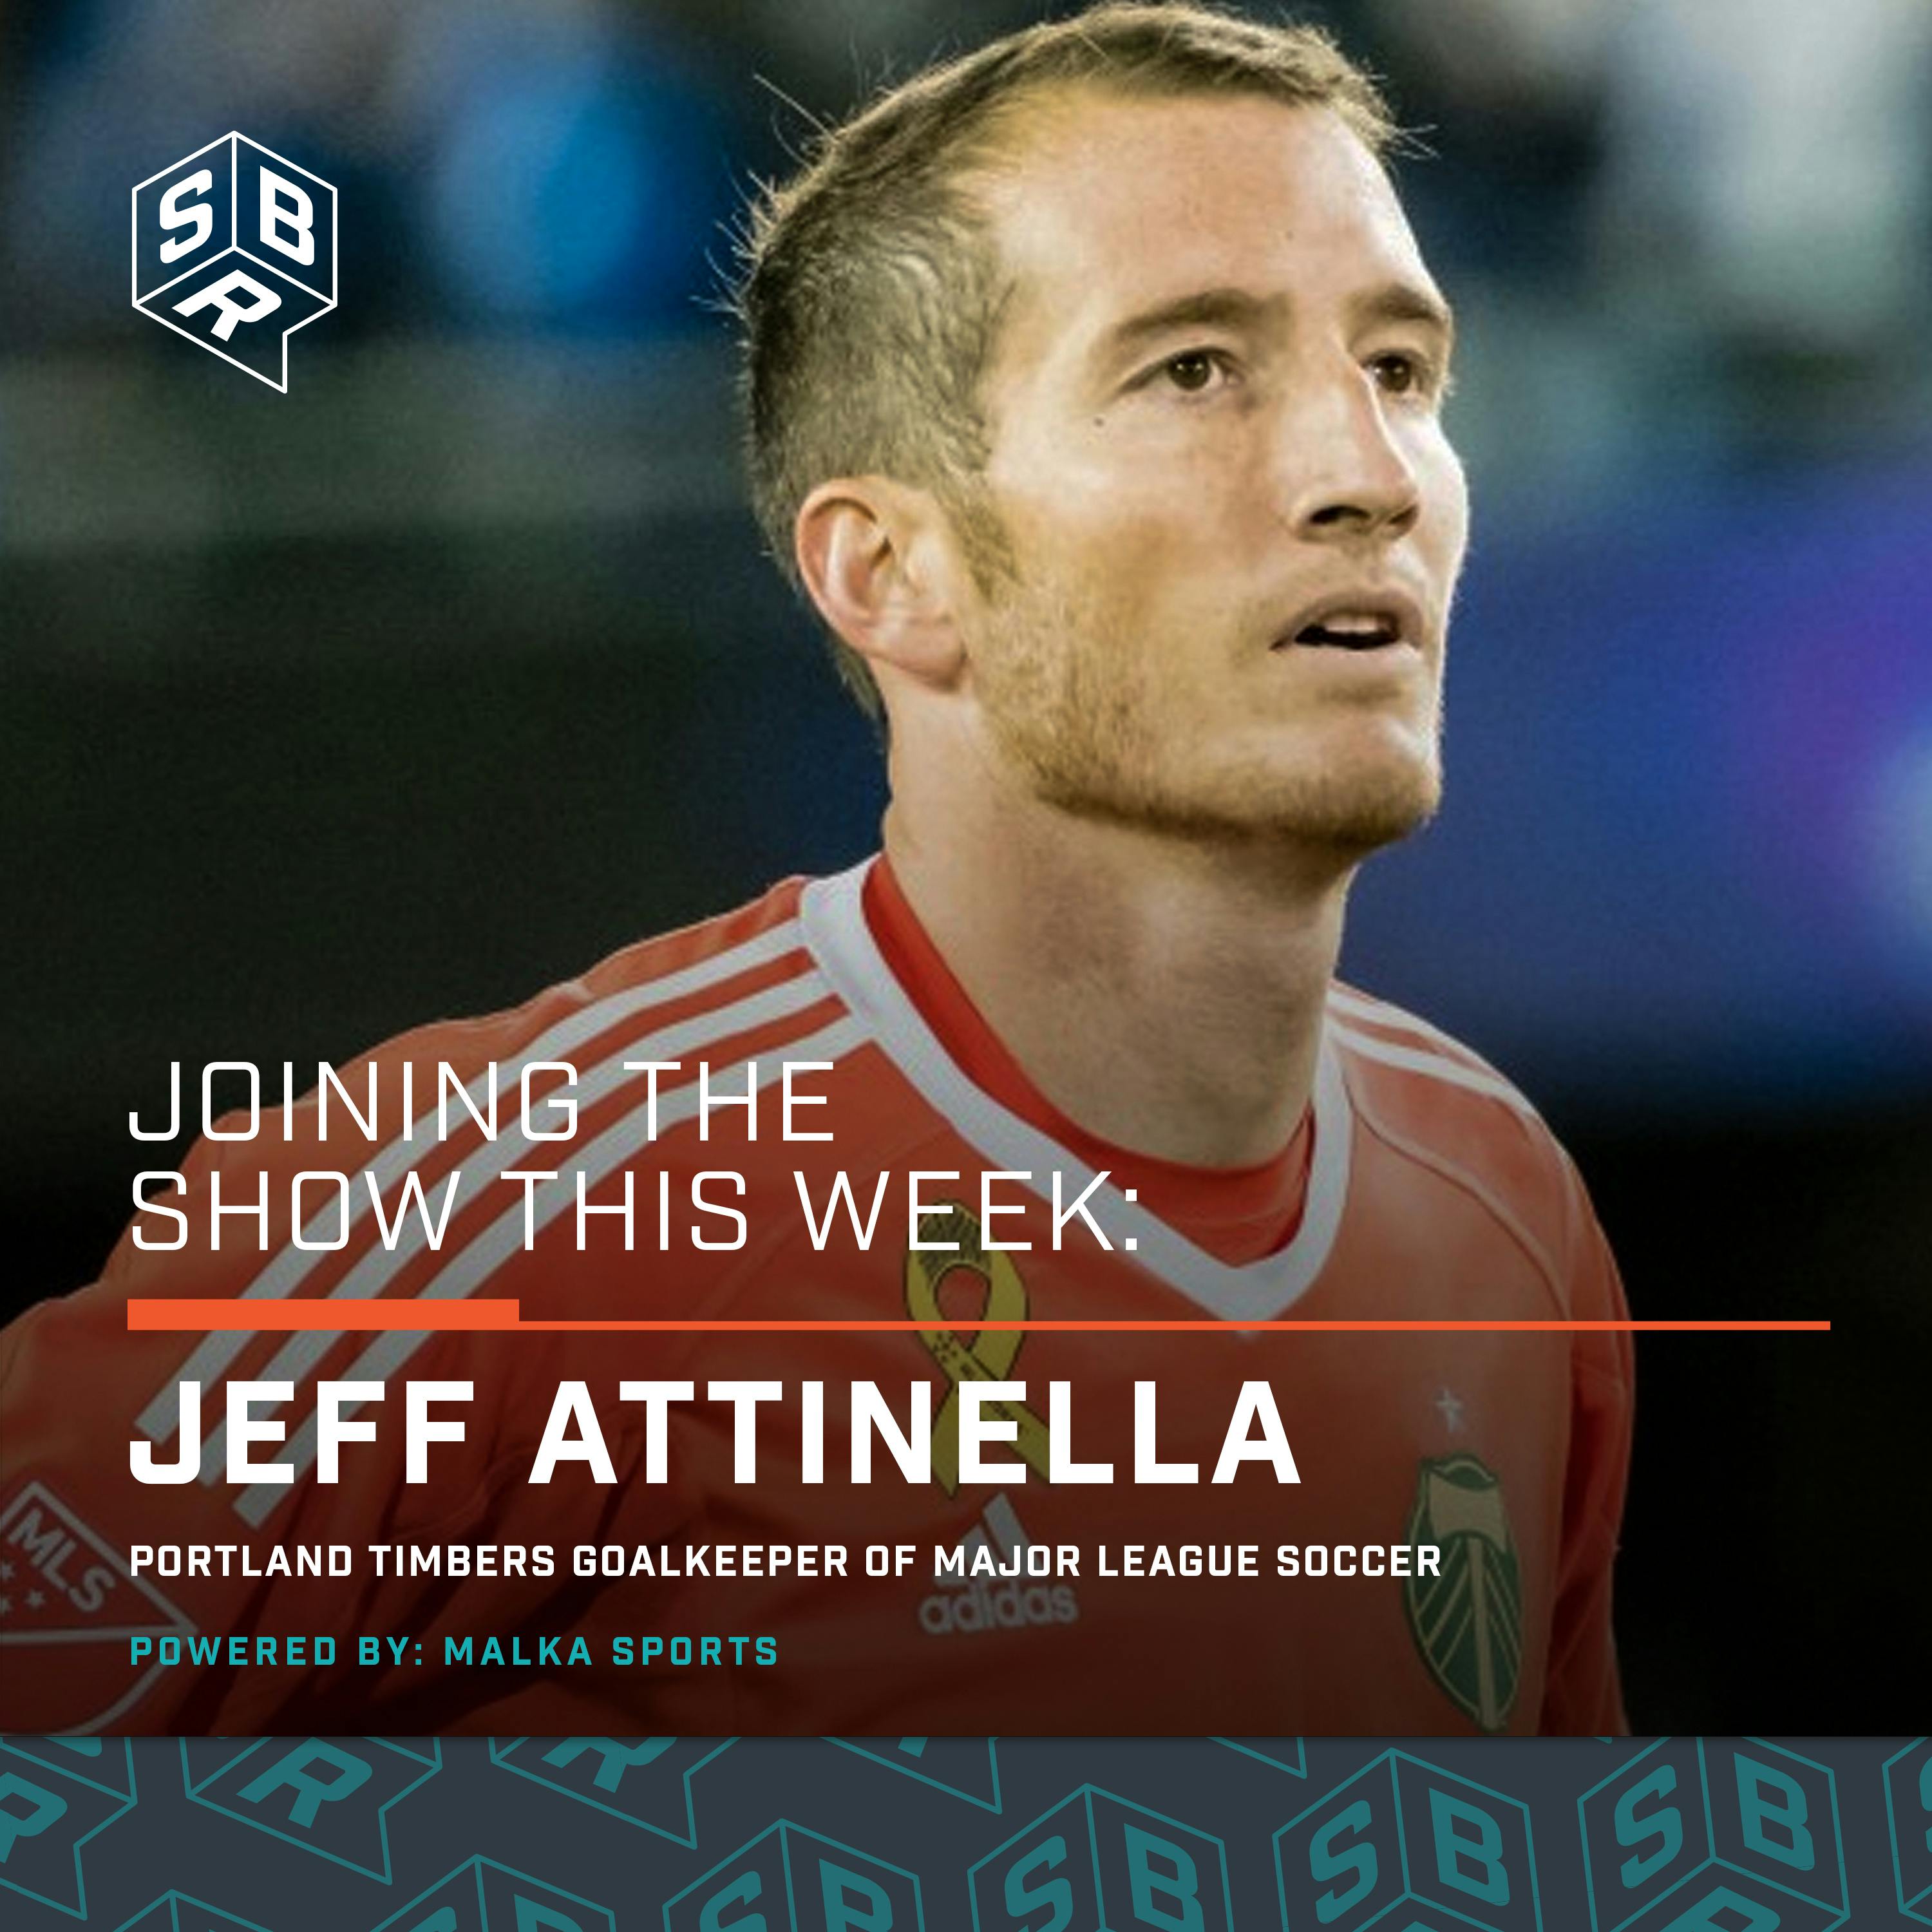 Jeff Attinella - Portland Timbers Goalkeeper - Inside the MLS Bubble at DisneyWorld